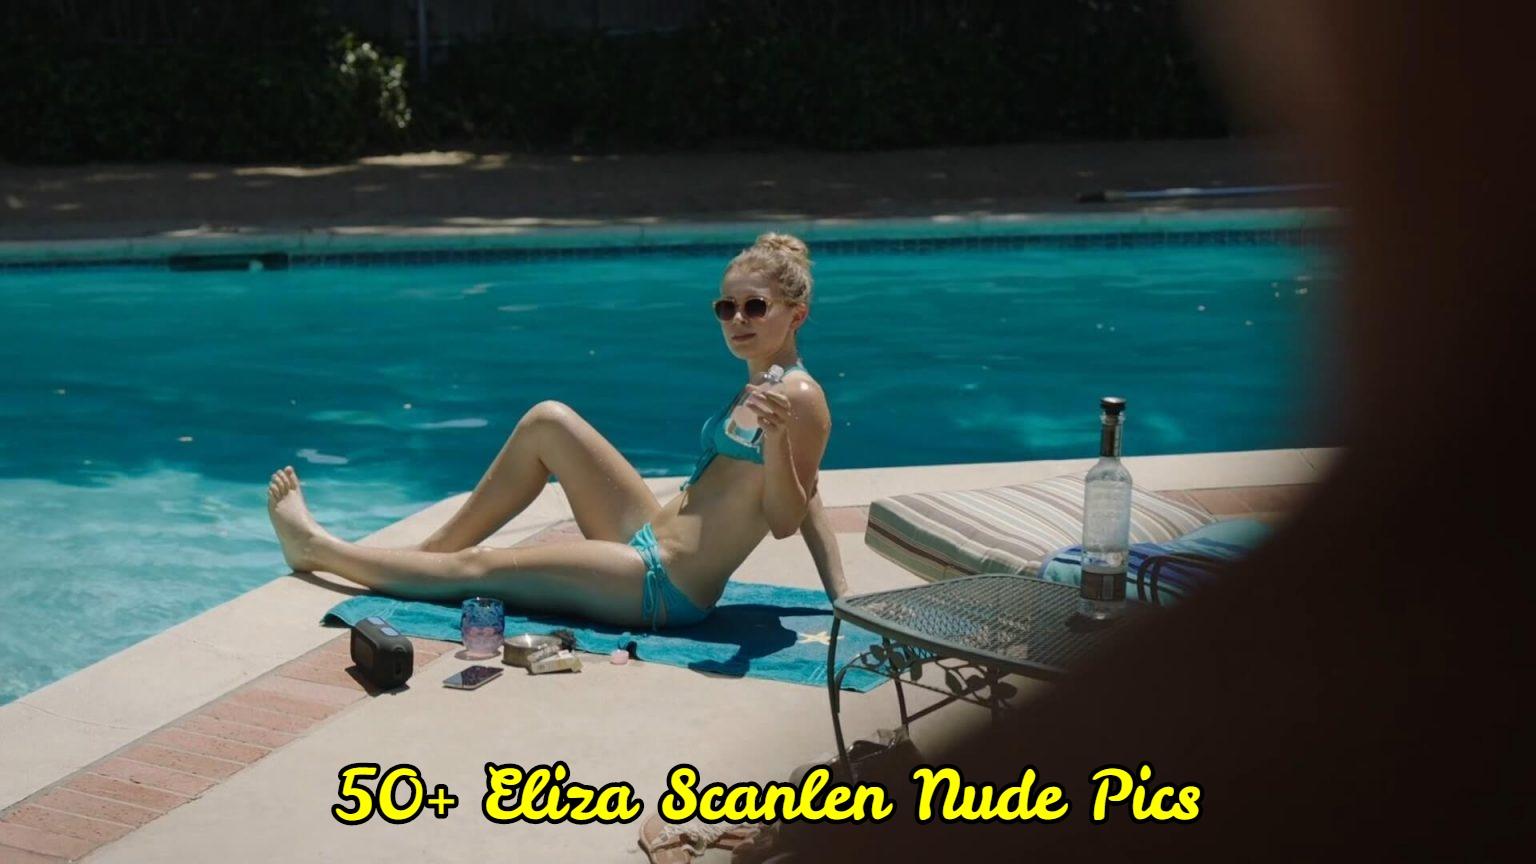 49 Eliza Scanlen Nude Pictures Present Her Wild Side Allure | Best Of Comic Books